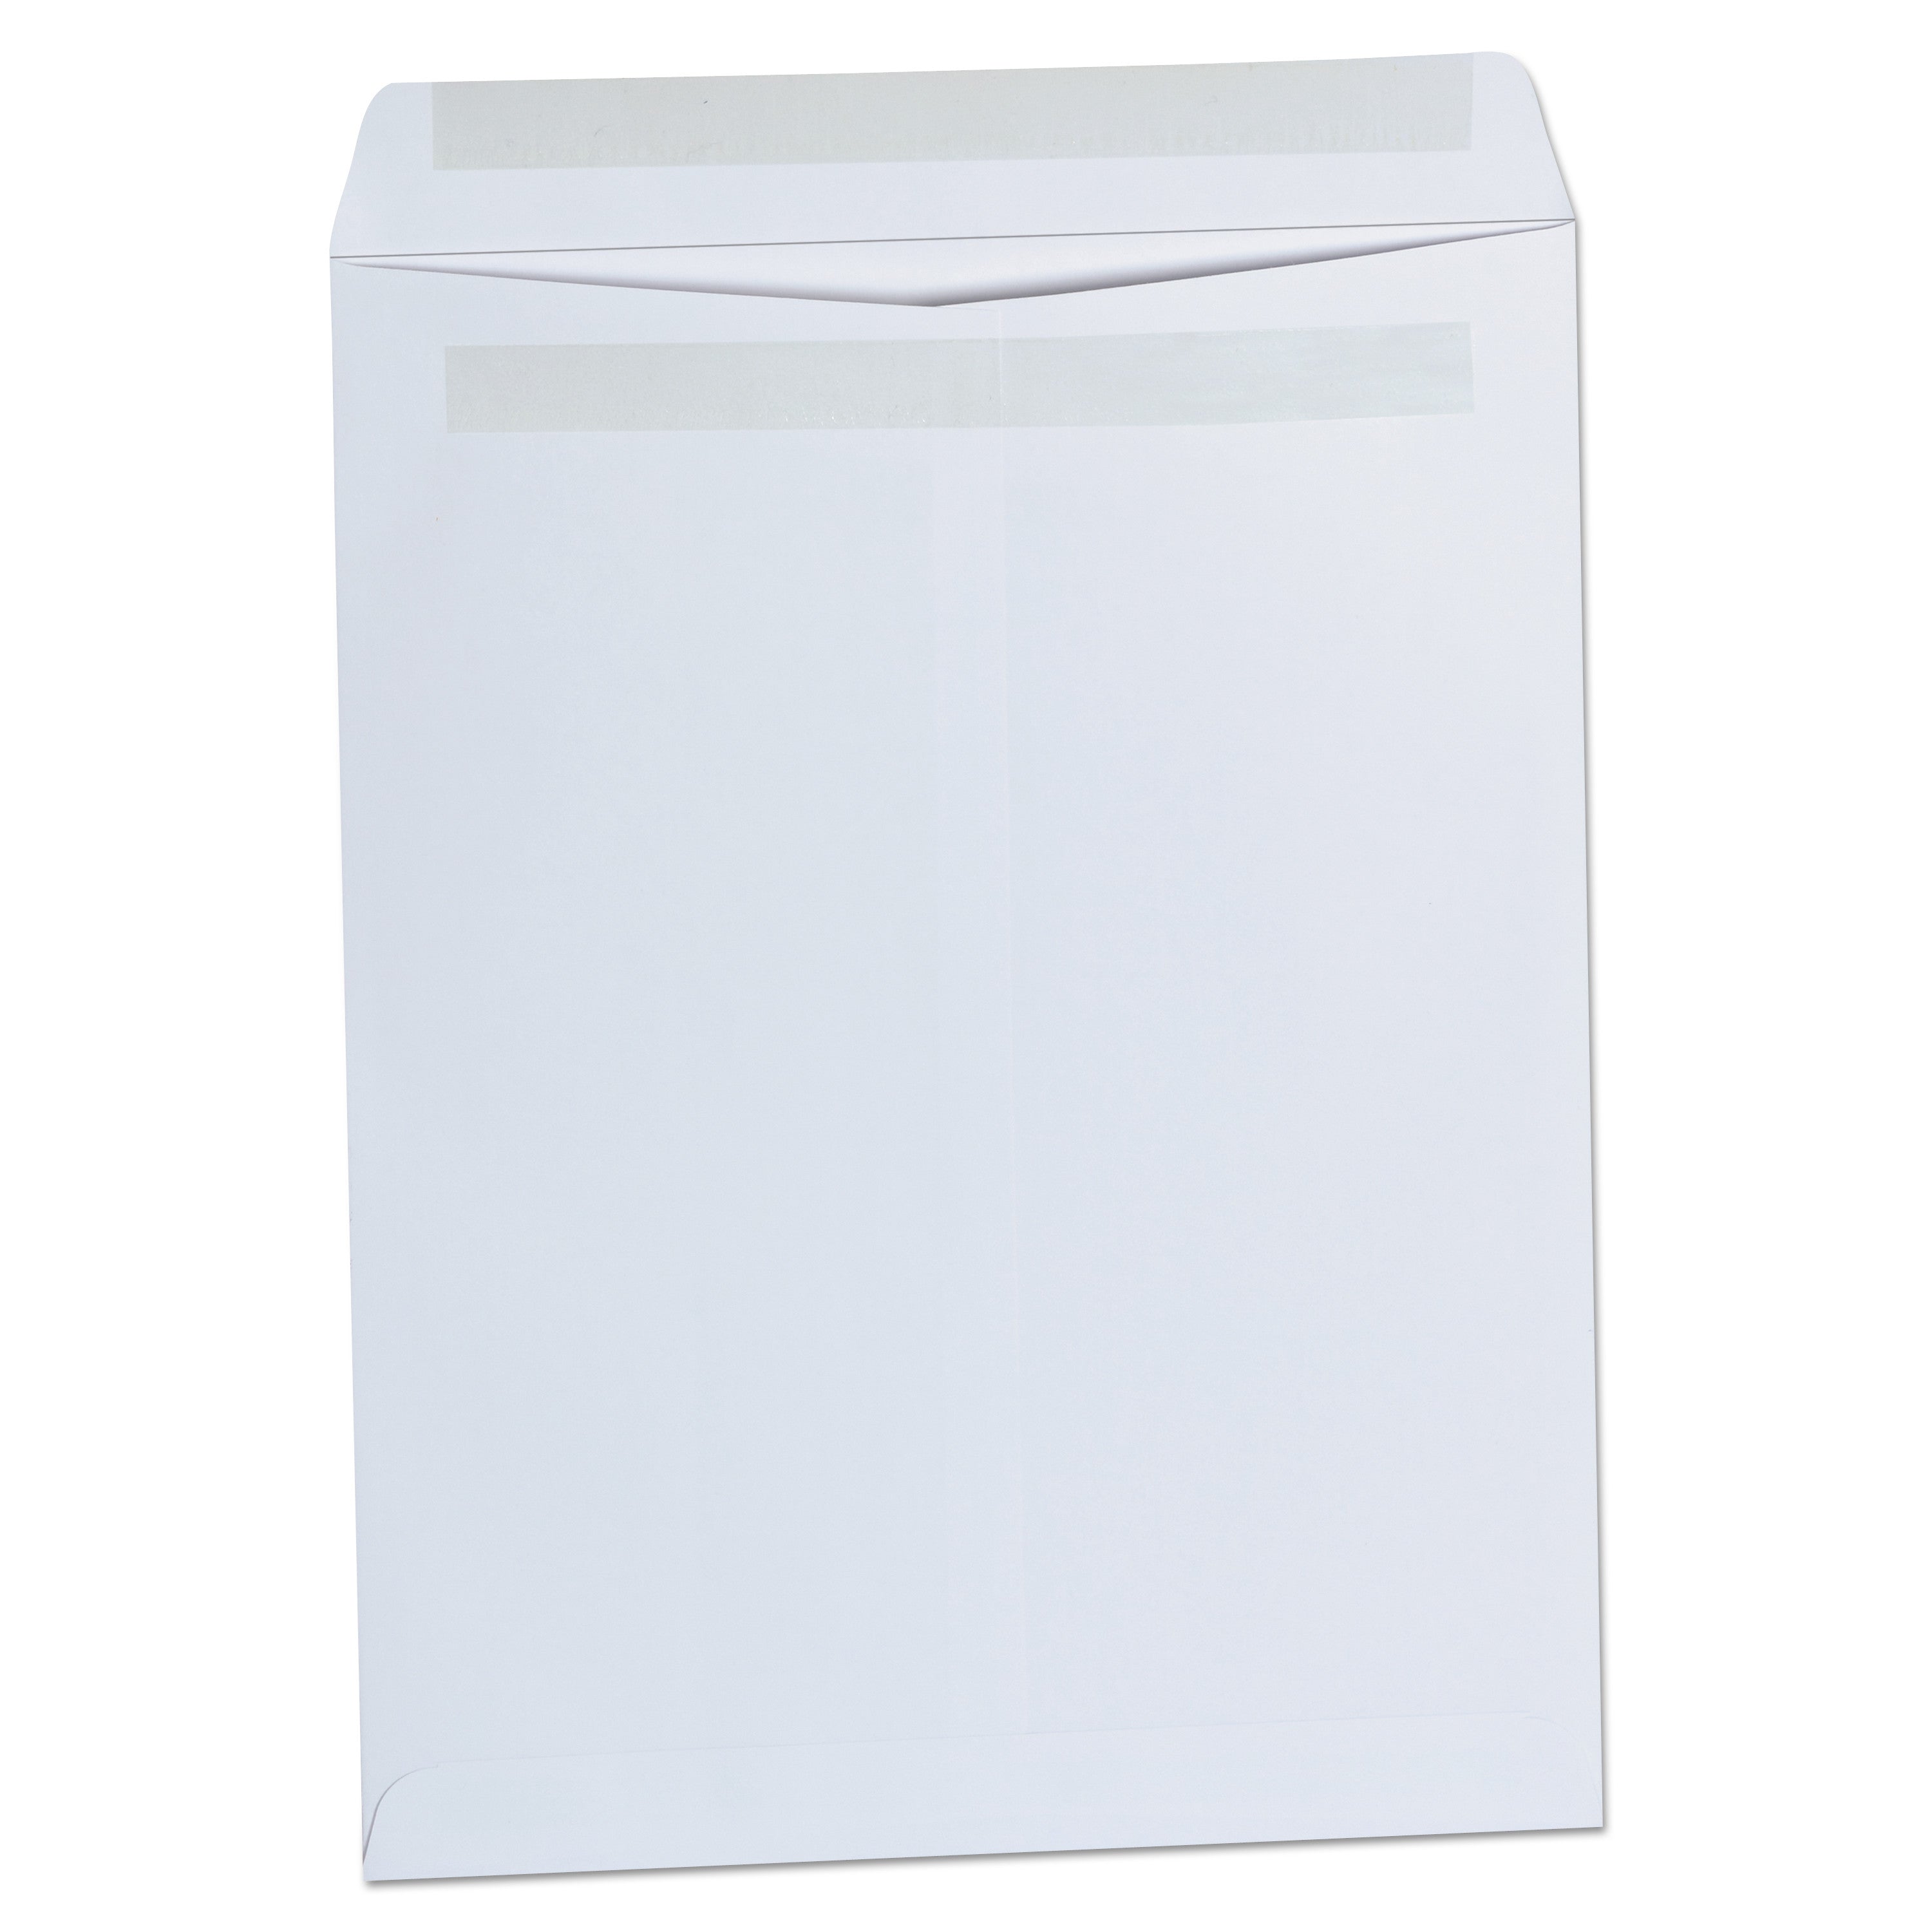 Self-Stick Open End Catalog Envelope, #13 1/2, Square Flap, Self-Adhesive Closure, 10 x 13, White, 100/Box - 